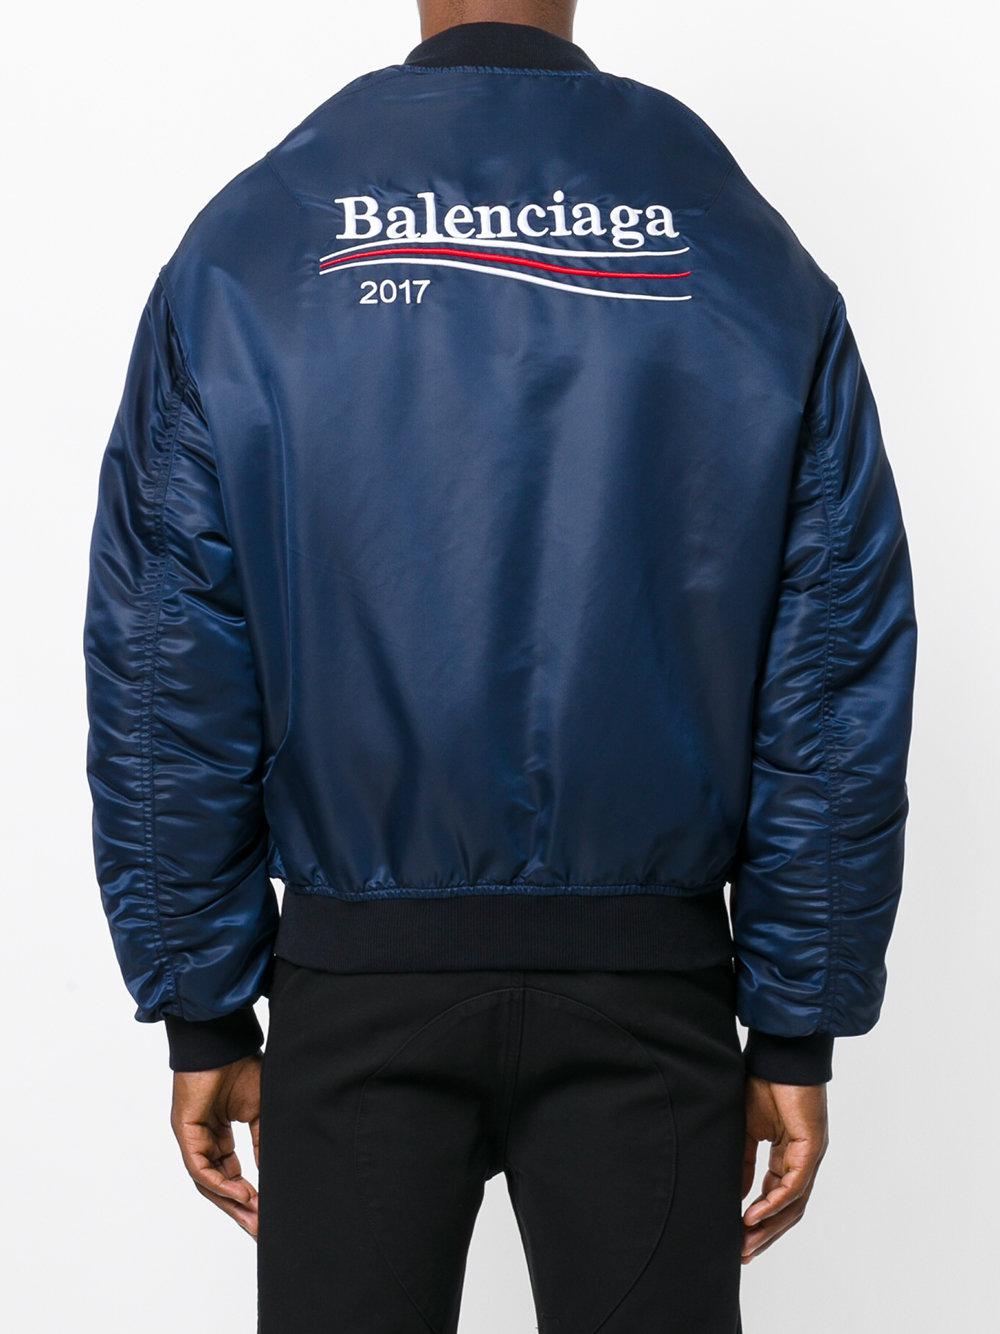 Balenciaga 2017 Bomber Jacket in Blue for Men | Lyst